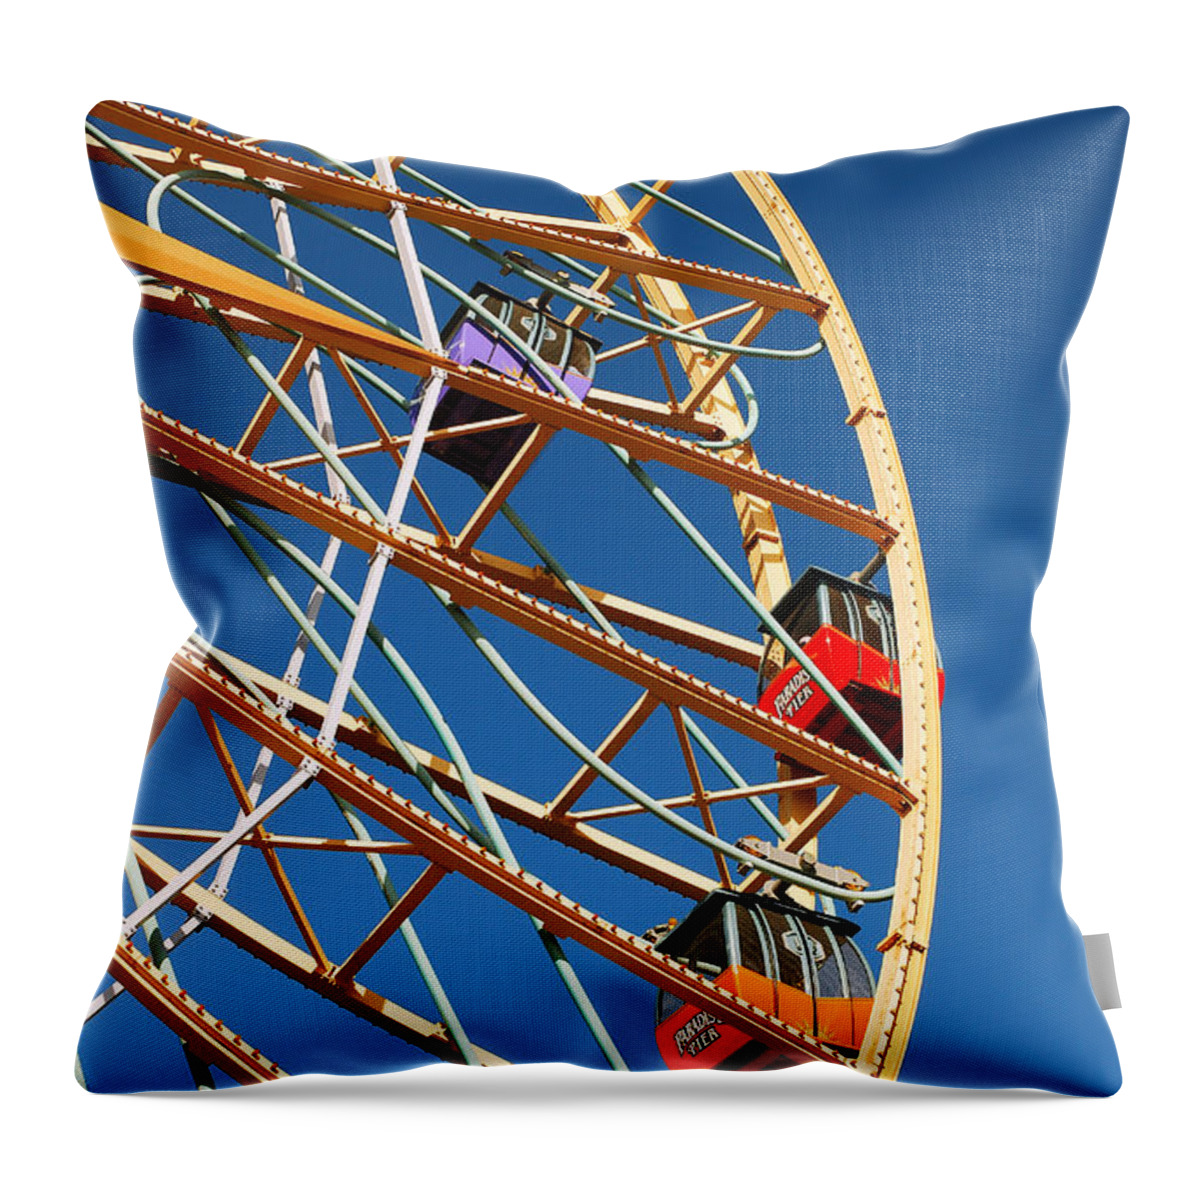 California Adventure Throw Pillow featuring the photograph Giant Wheel by James Kirkikis